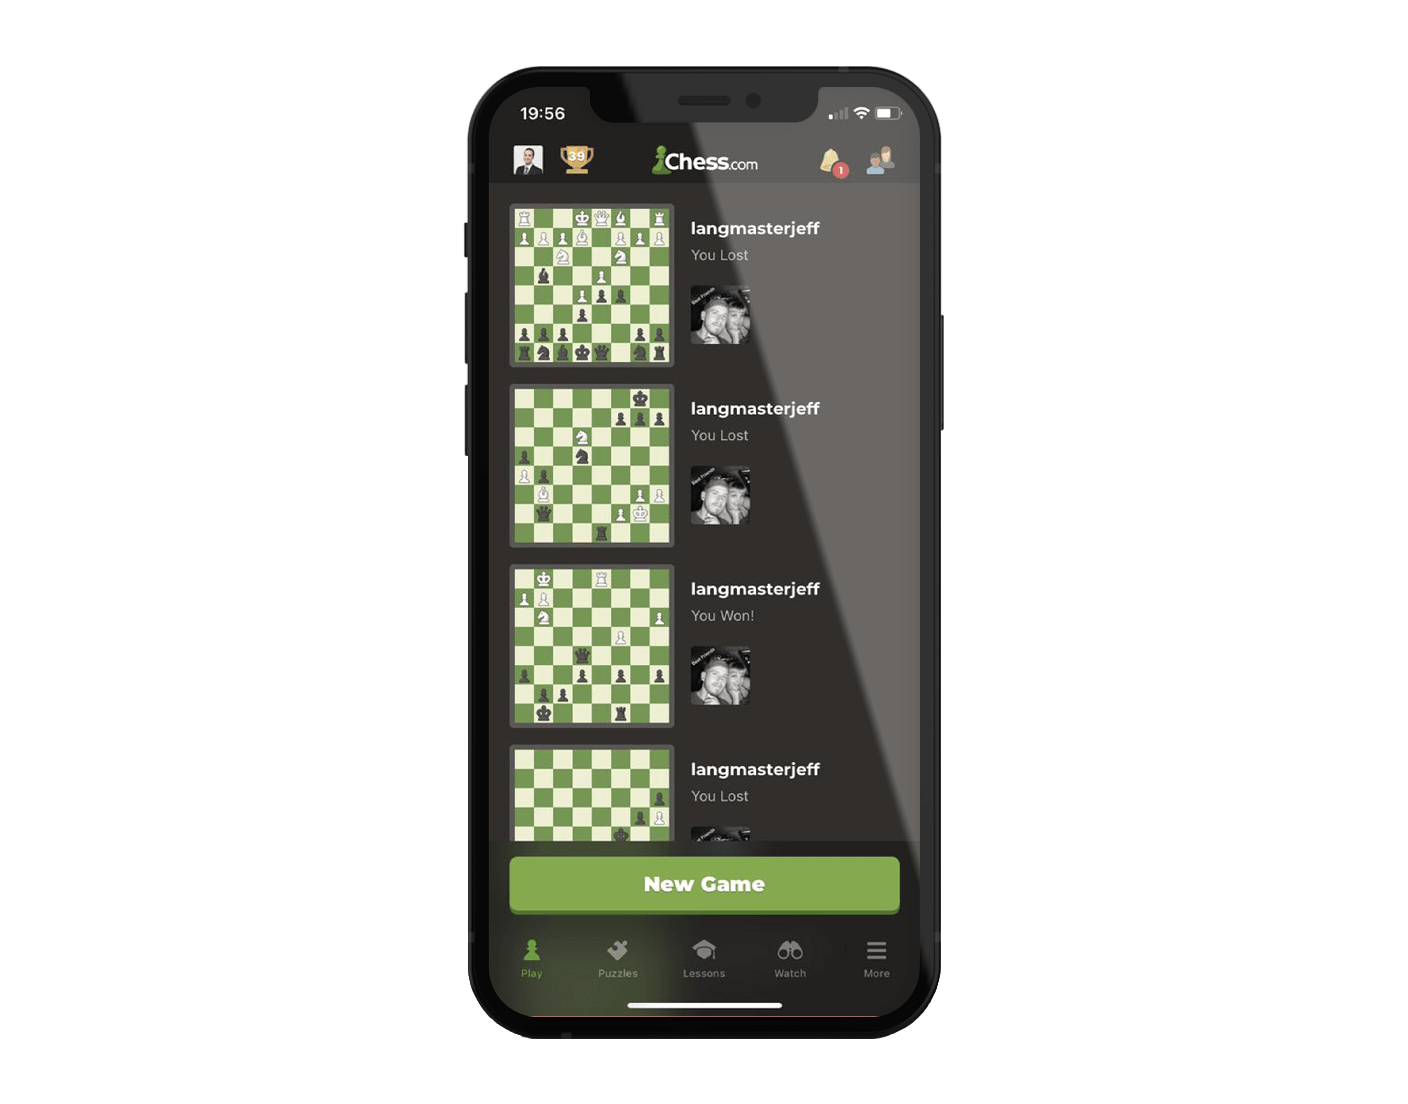 The new home screen Chess.com mobile app